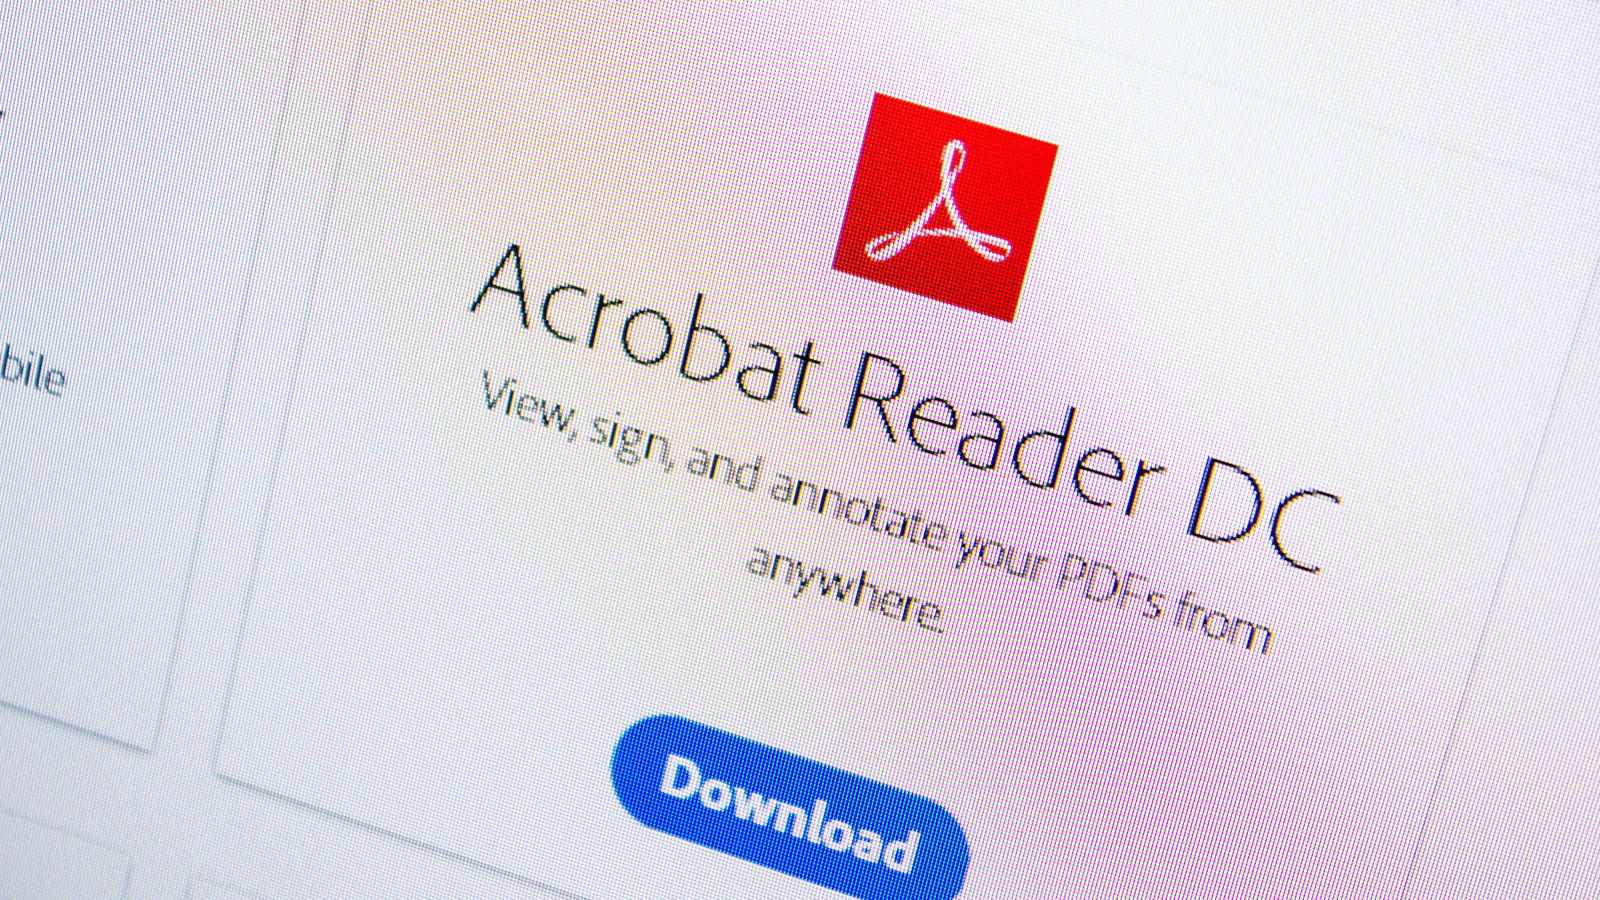 Adobe Acrobat may block antivirus tools from monitoring PDF files